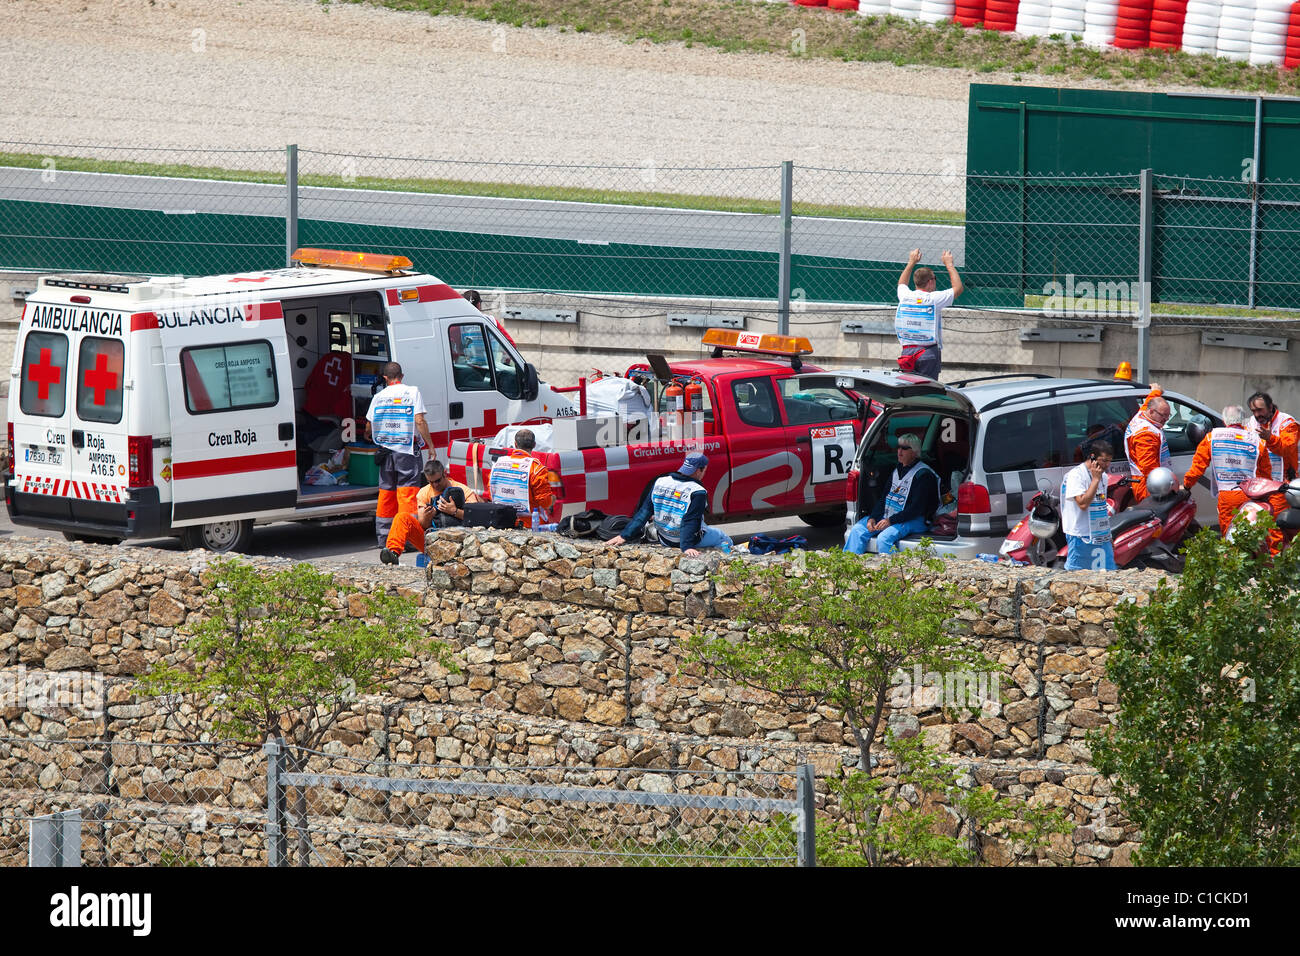 The Formula 1 Grand Prix at autodrome 'Catalunya Montmello' on May 9, 2010 in Barcelona. Stock Photo